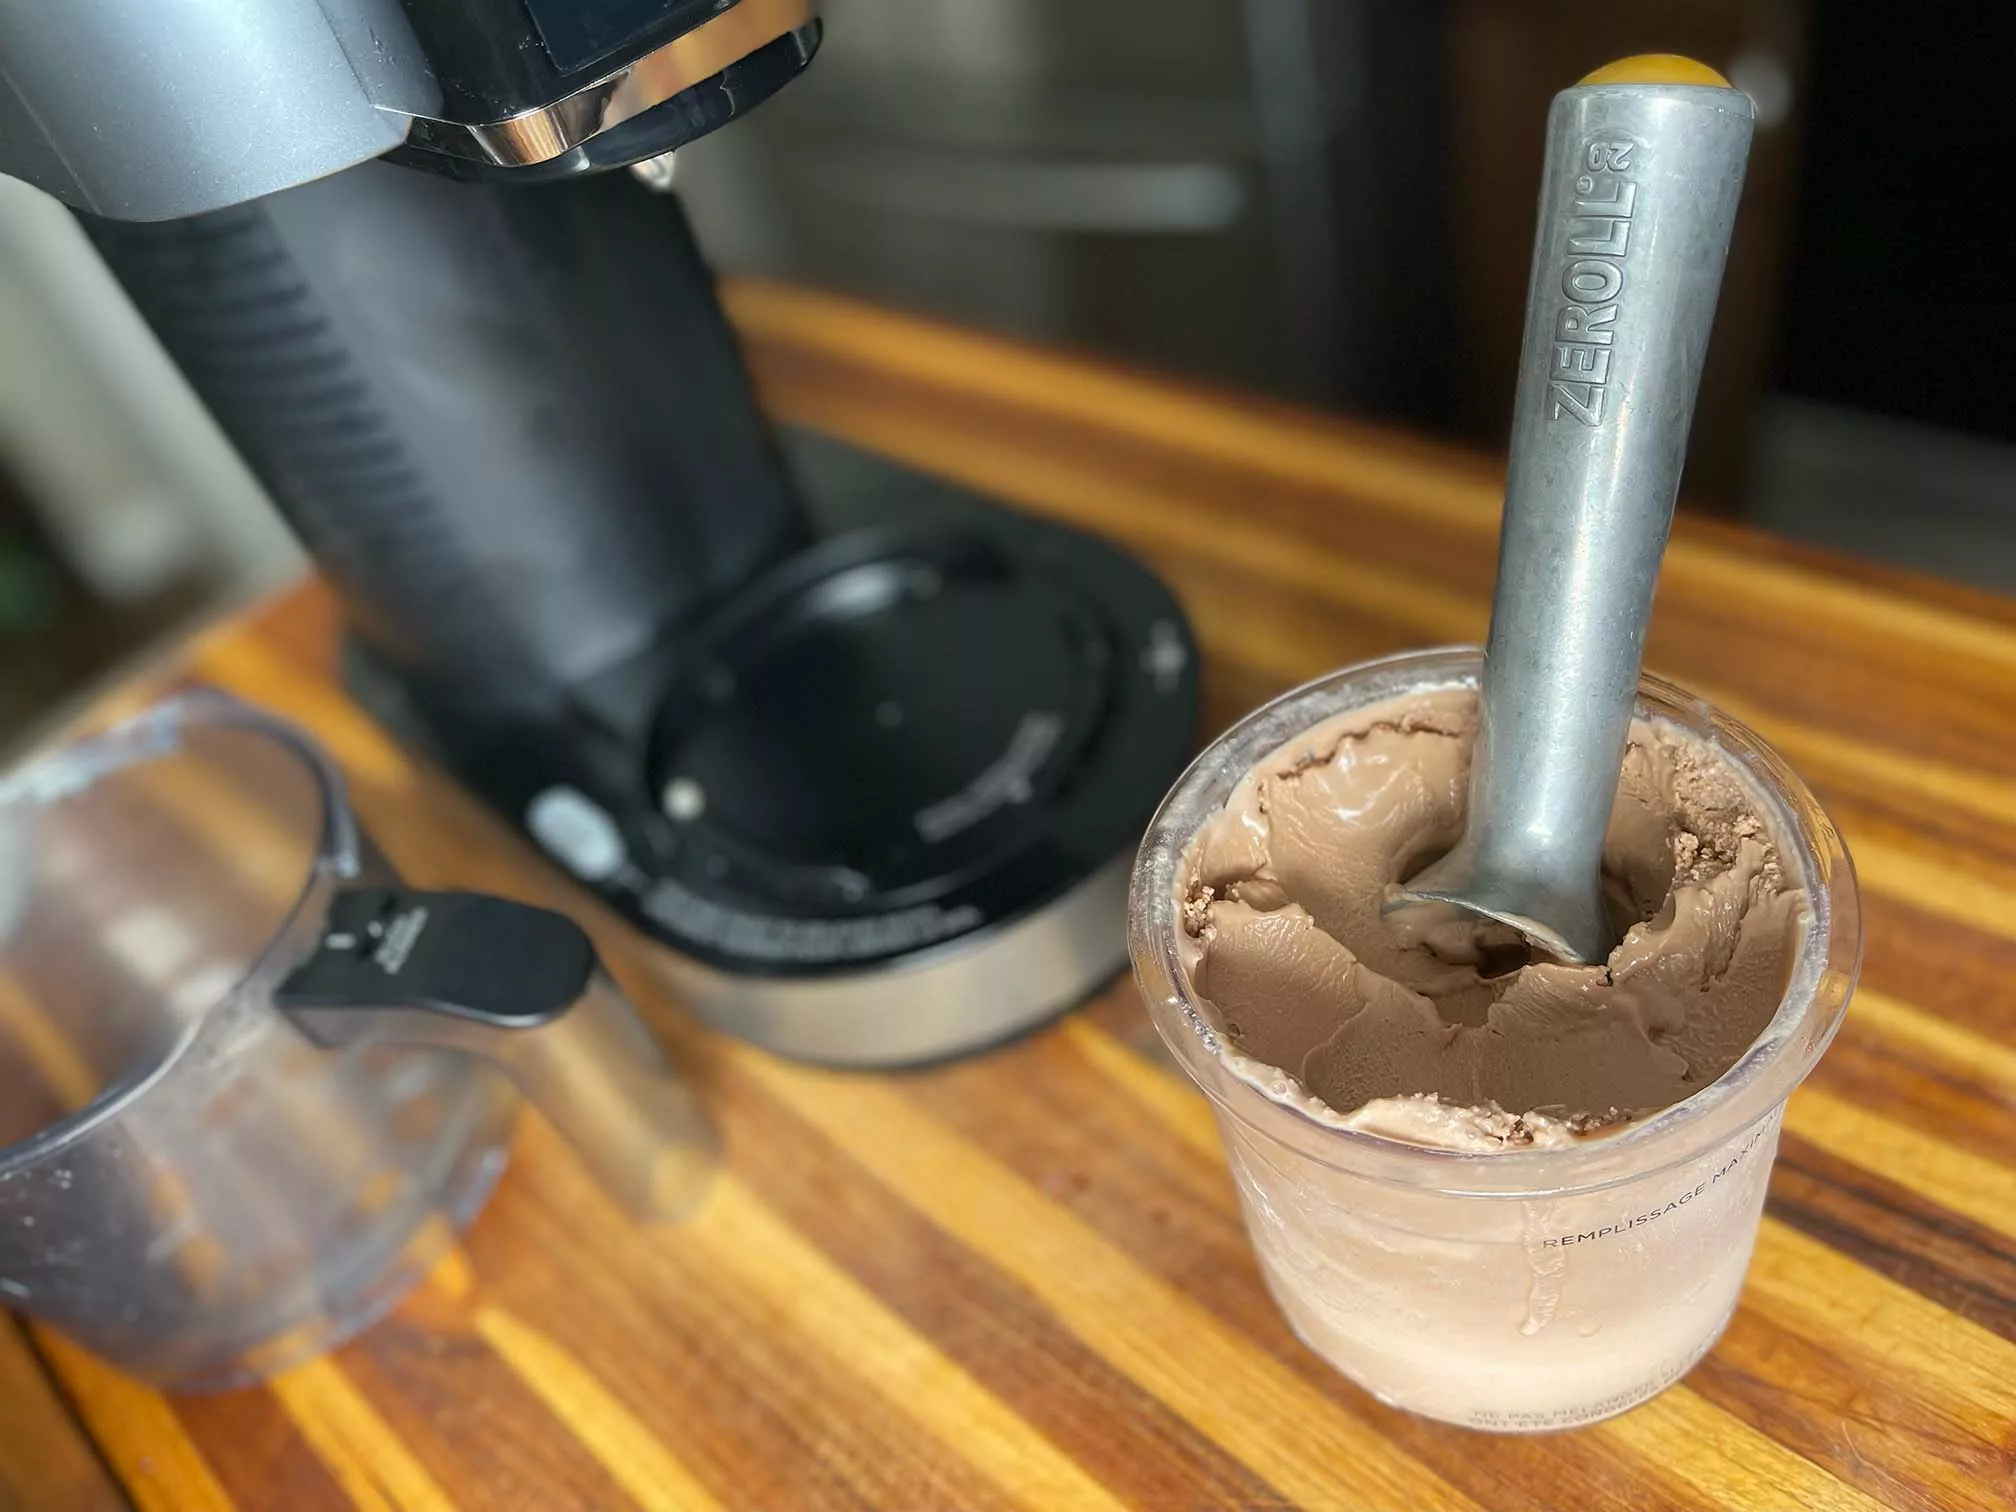 The Ninja Creami Review - Healthy Ice Cream?